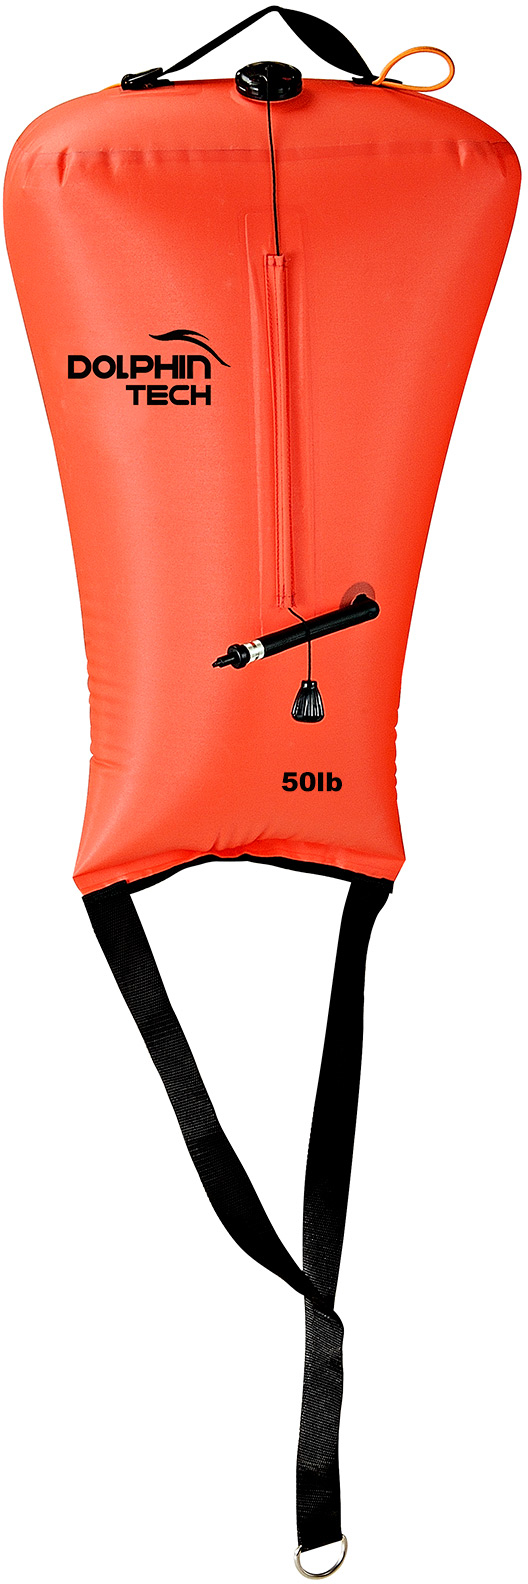 Dolphin Tech By IST 50lb Lift Bag w/210D TPU Coated Nylon